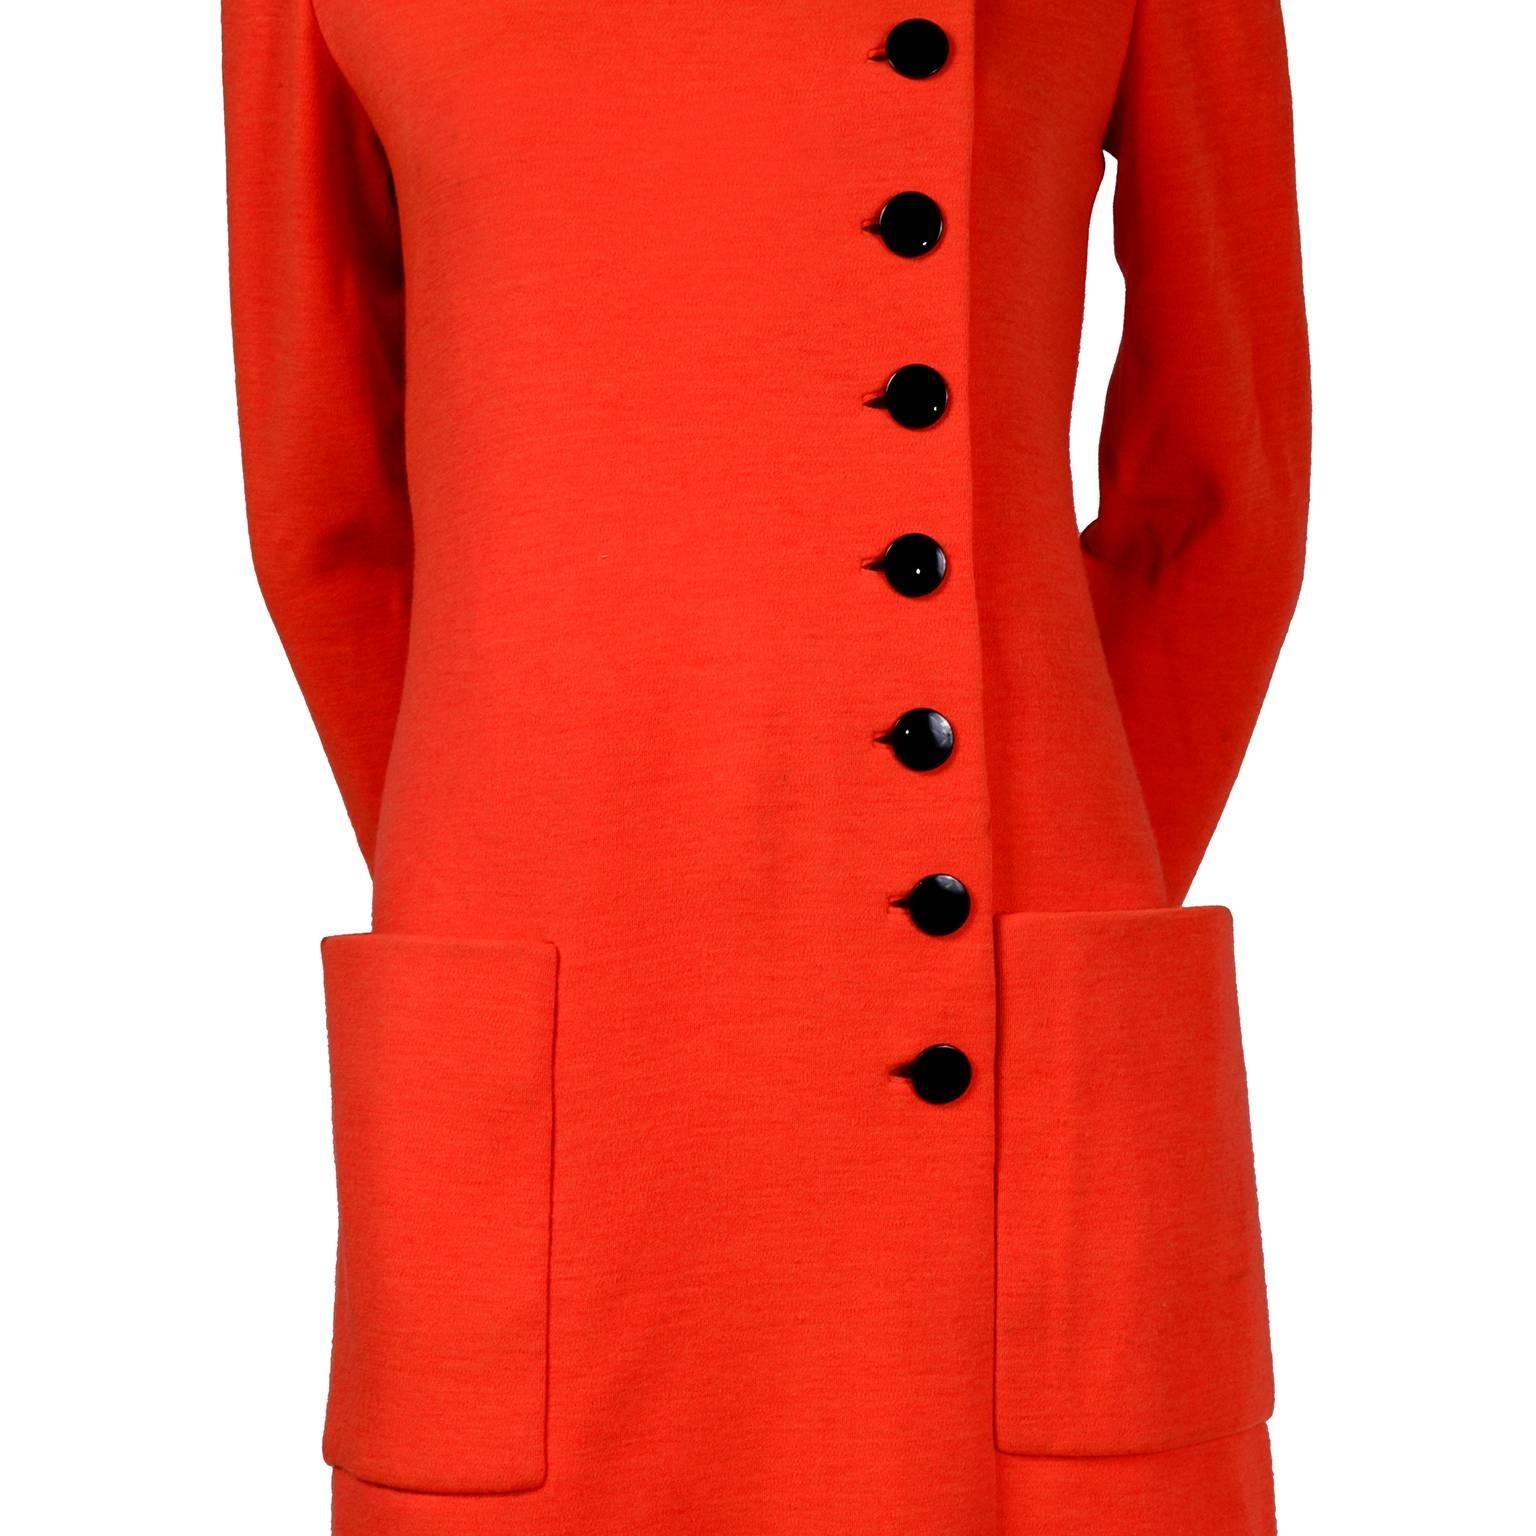 1960s Norman Norell Dress in Tangerine Orange Knit Patch Pockets & Belt Size 8 2